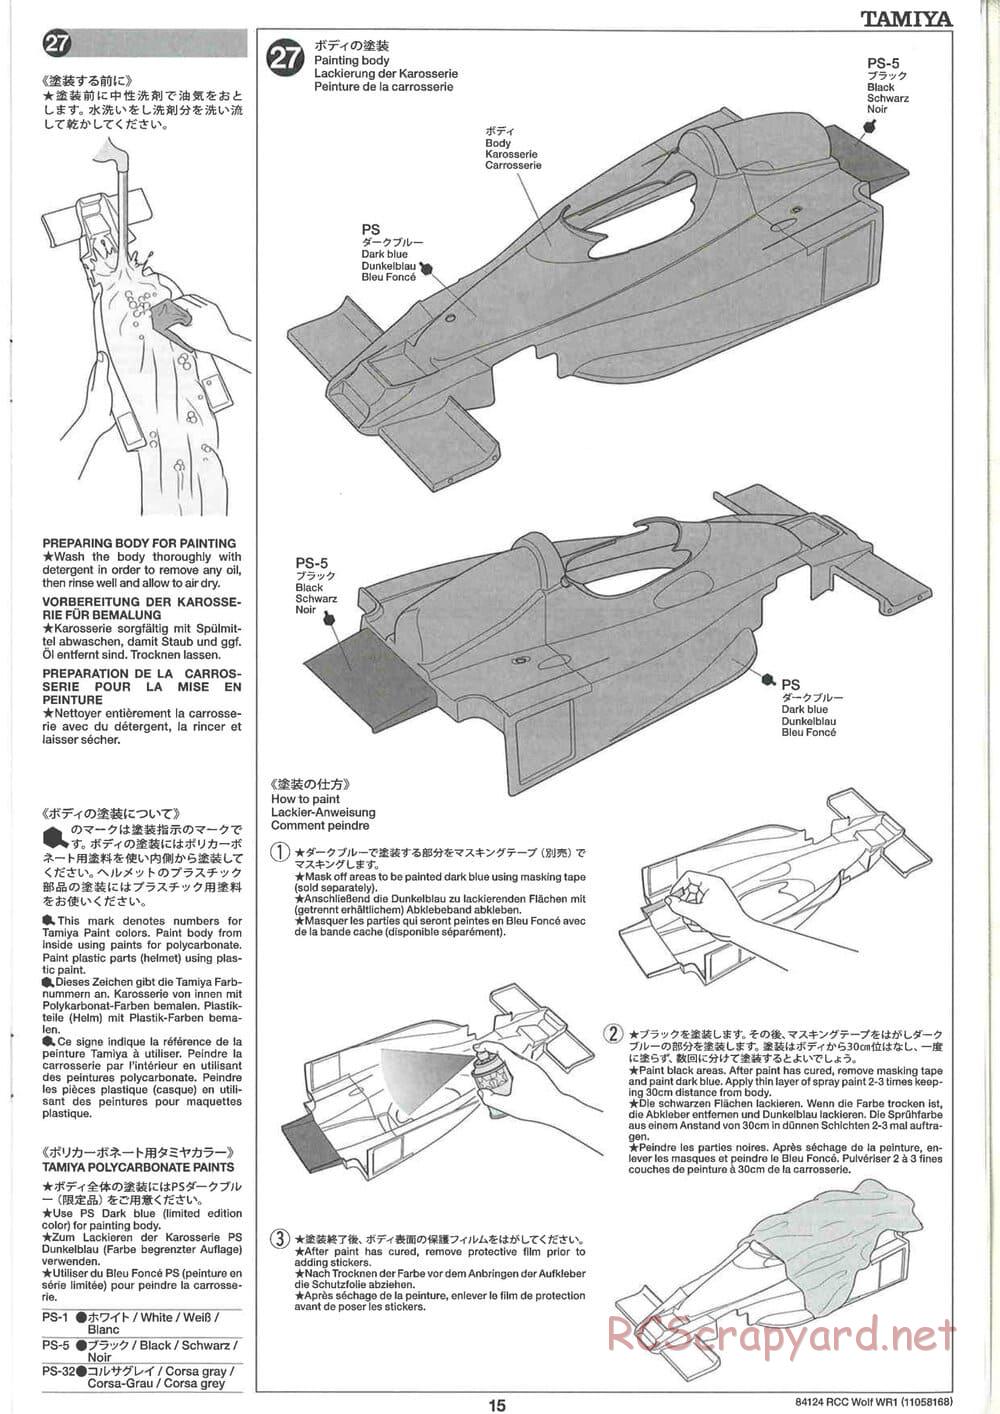 Tamiya - Wolf WR1 - F104W Chassis - Manual - Page 15